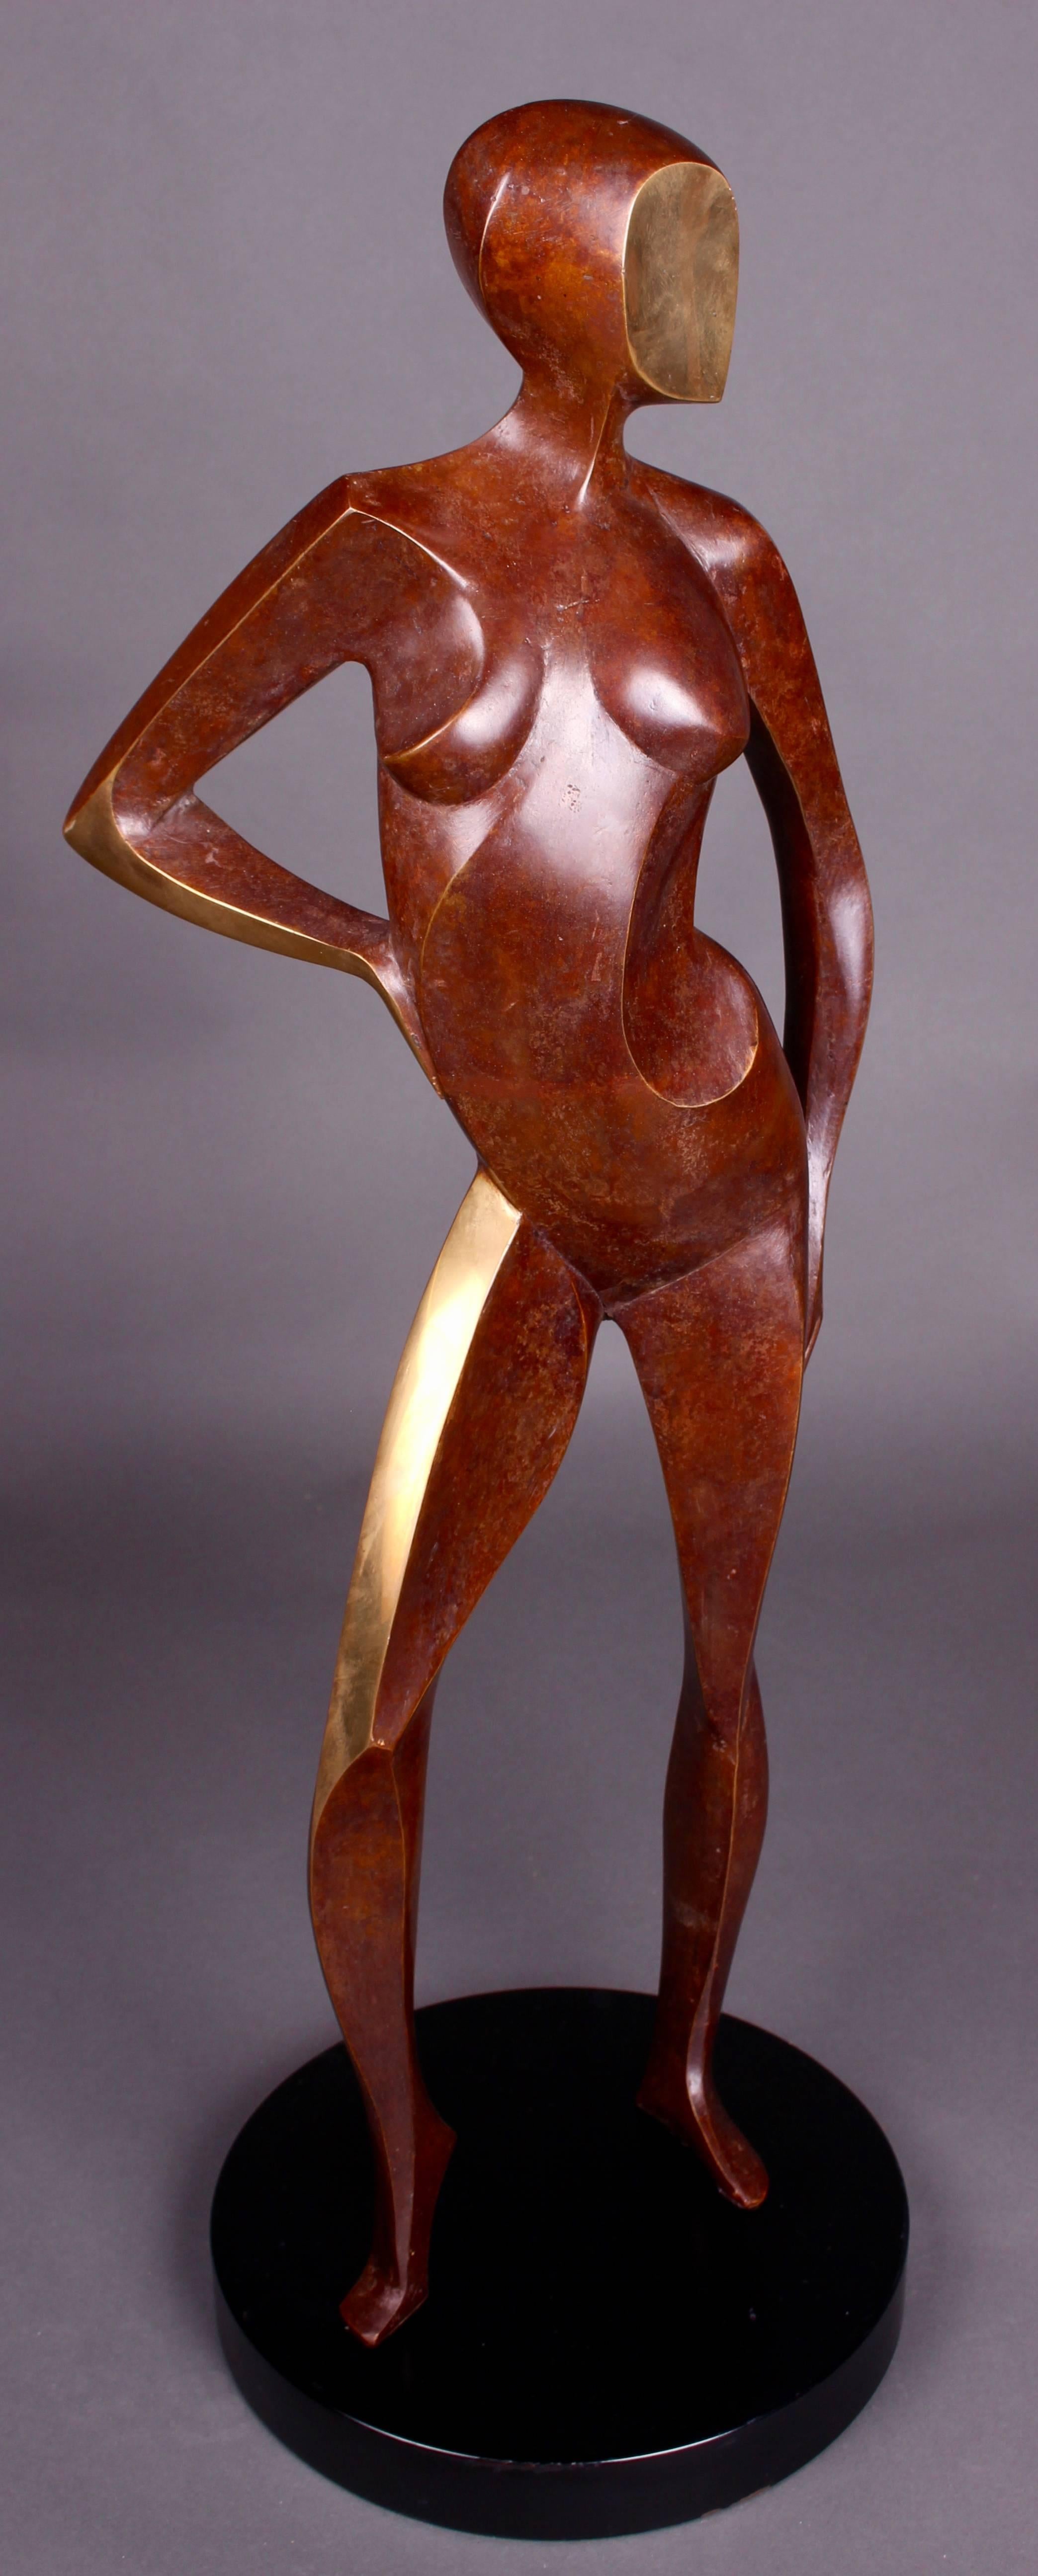 Mannequin - Gold Nude Sculpture by John Huggins